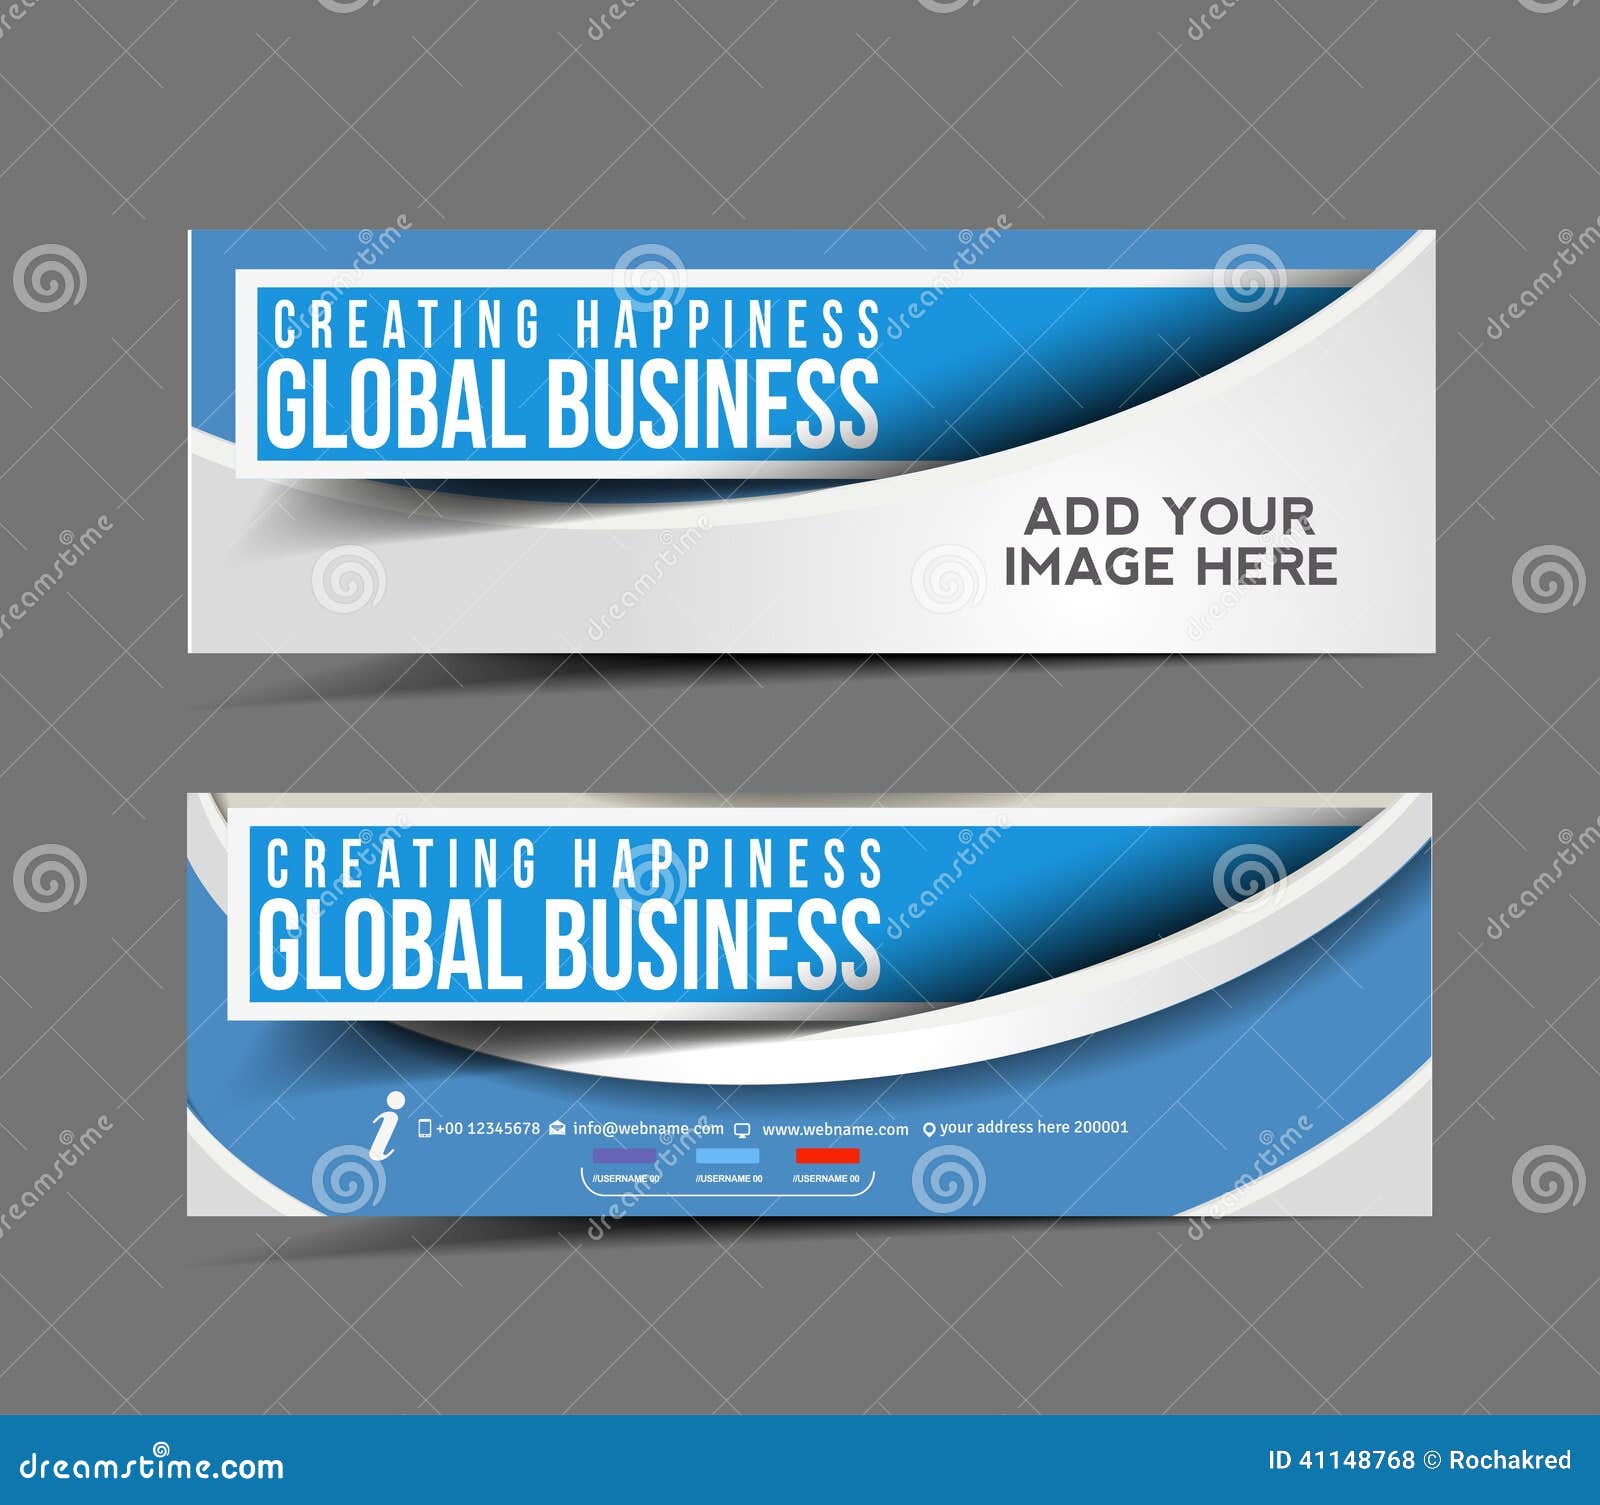 global business web banner